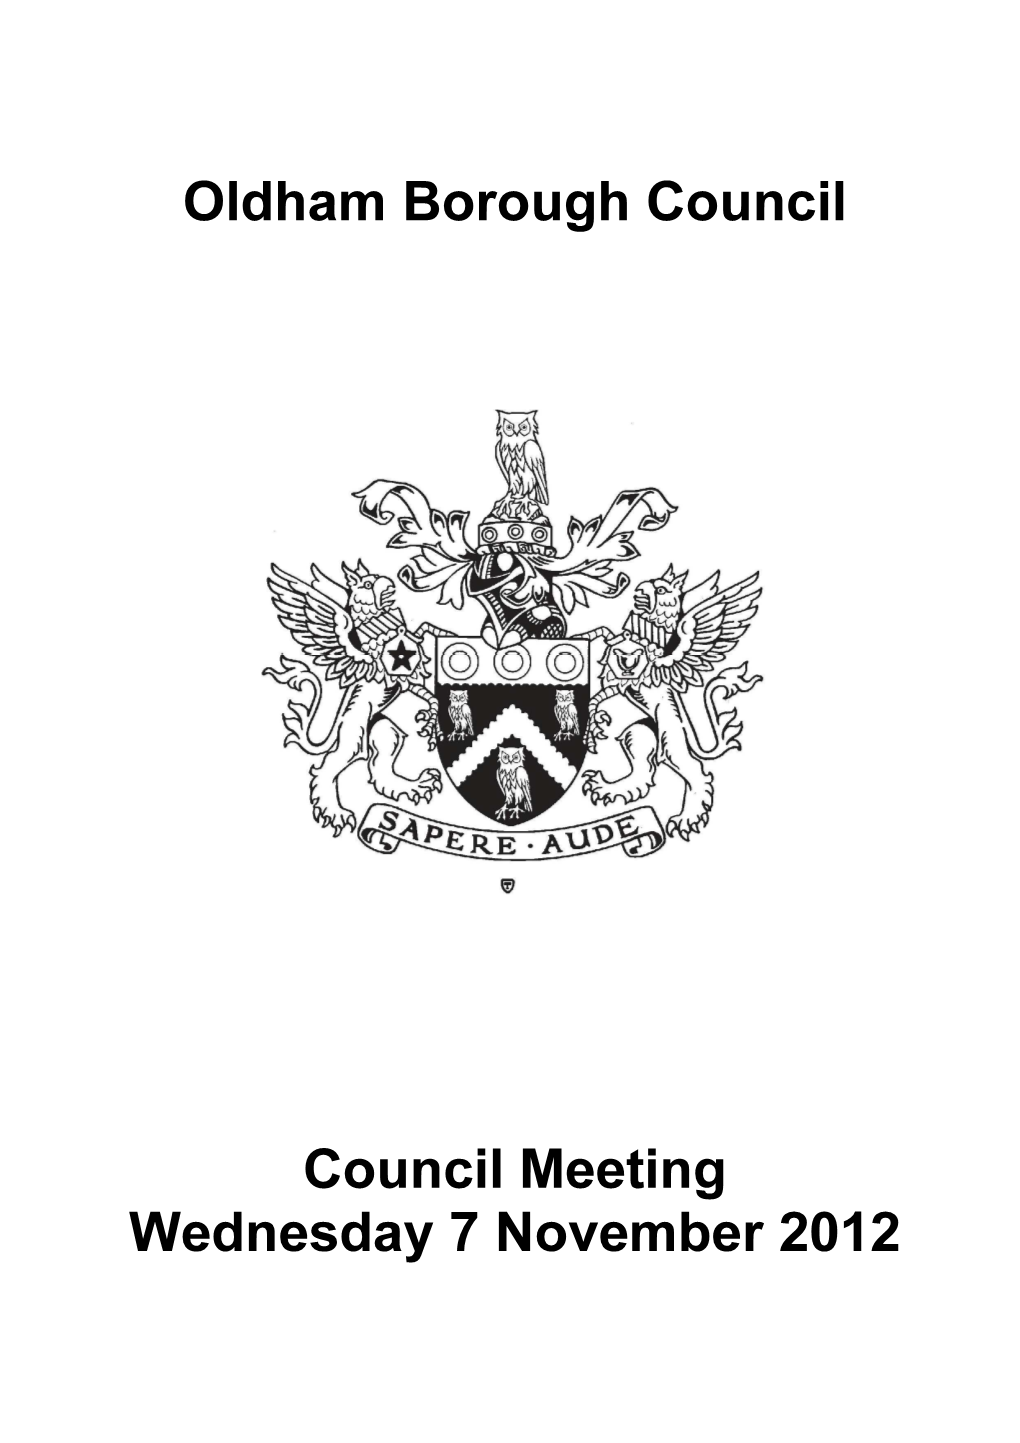 Oldham Borough Council Council Meeting Wednesday 7 November